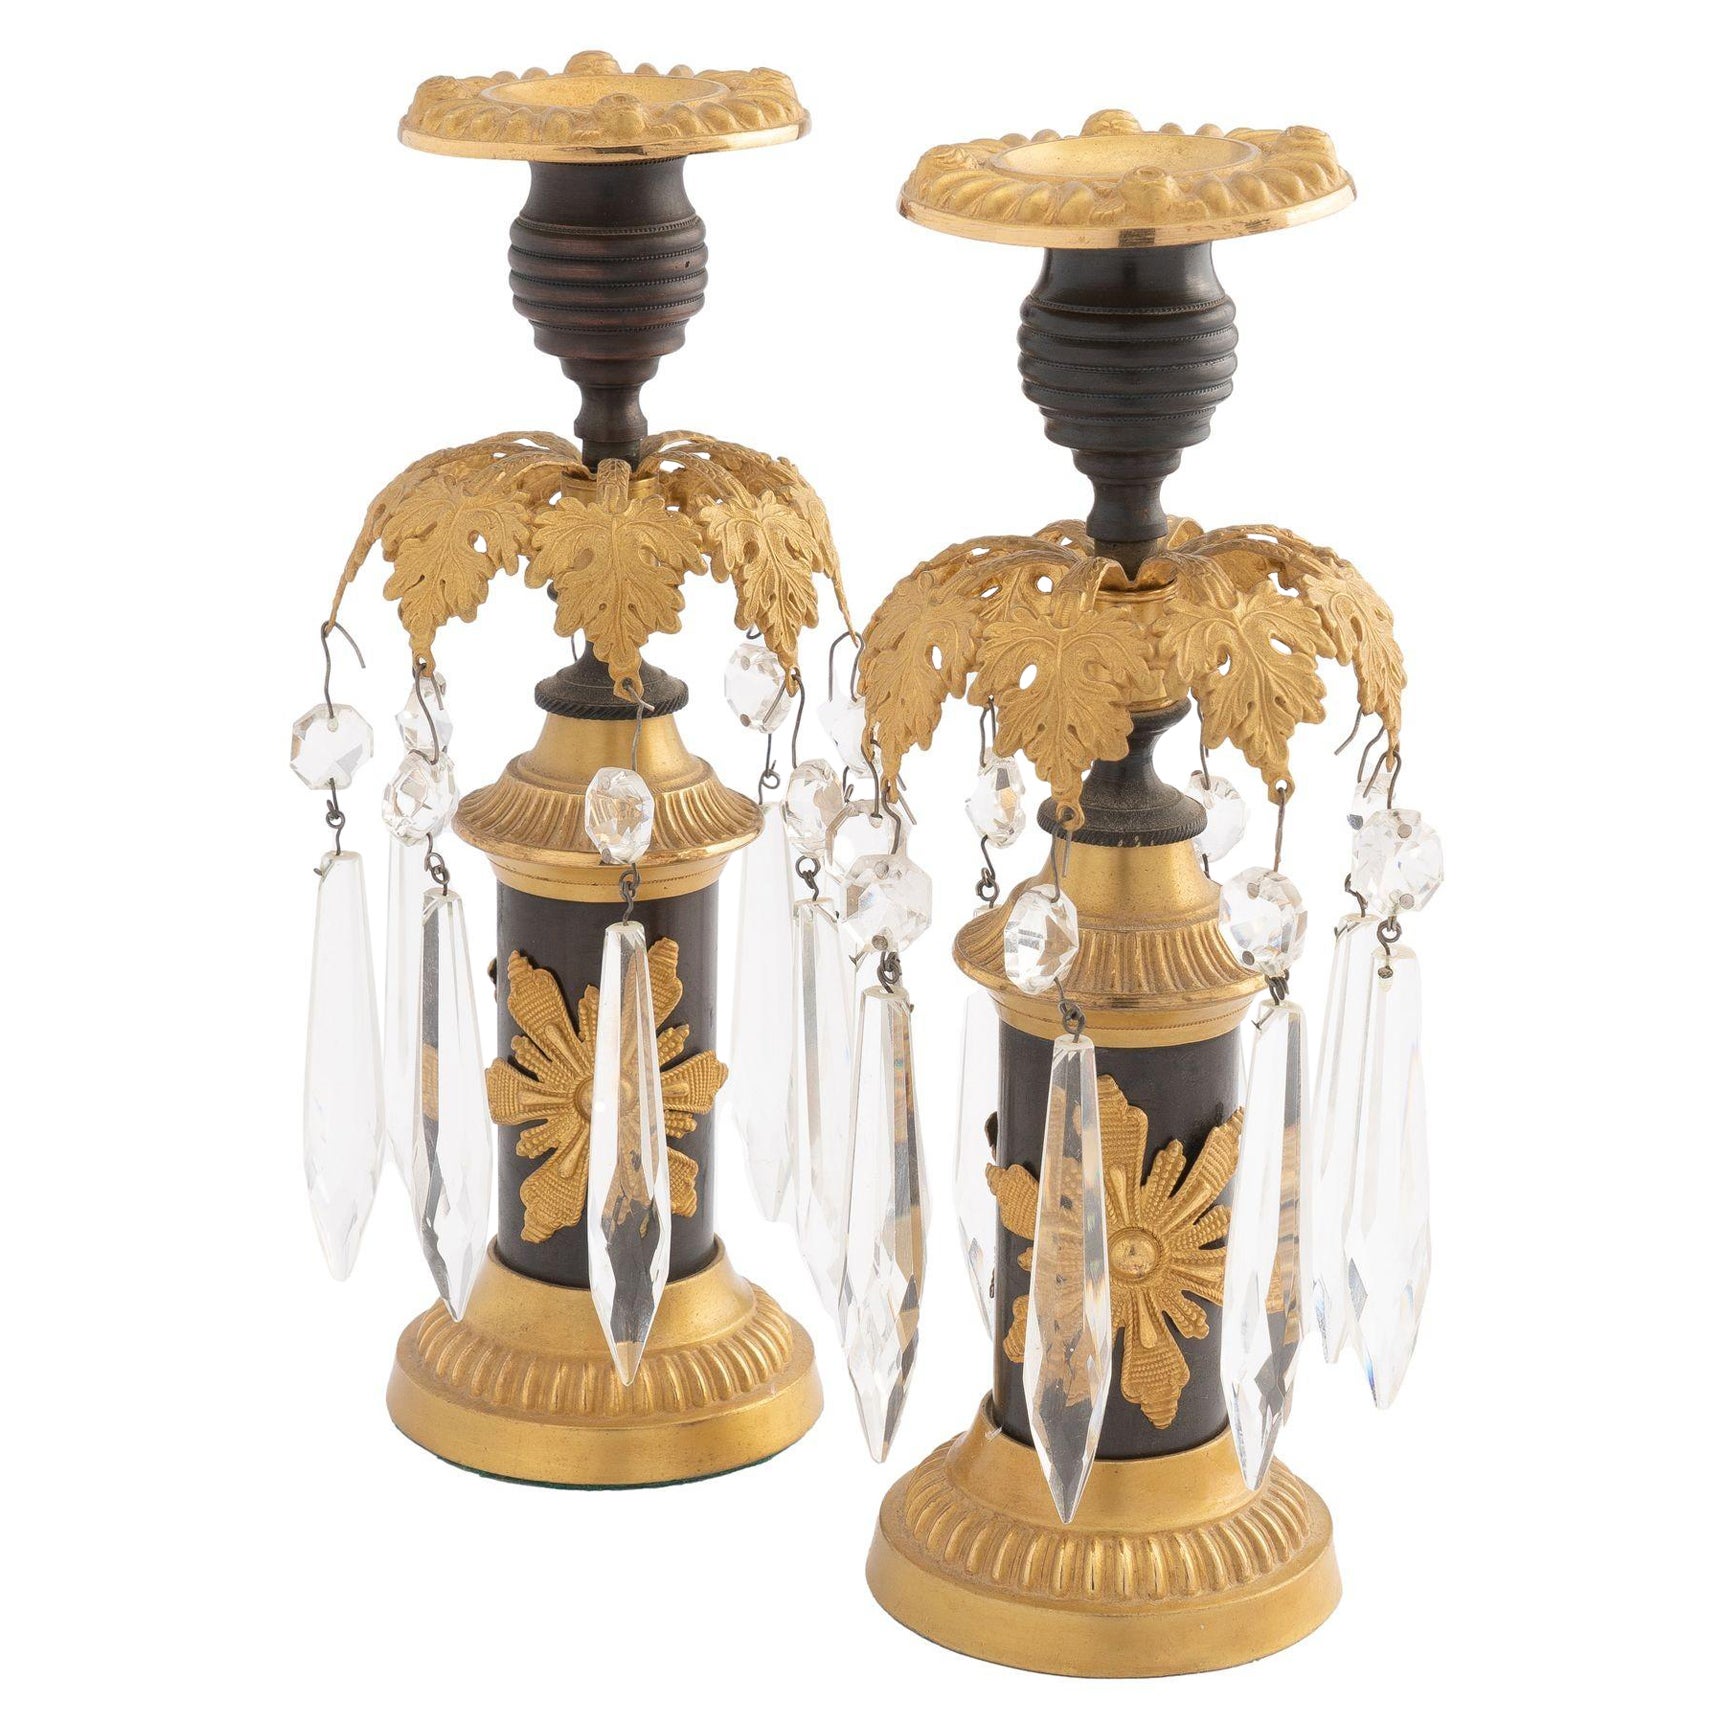 Chandeliers de style English Regency avec éclats en cristal, 1800